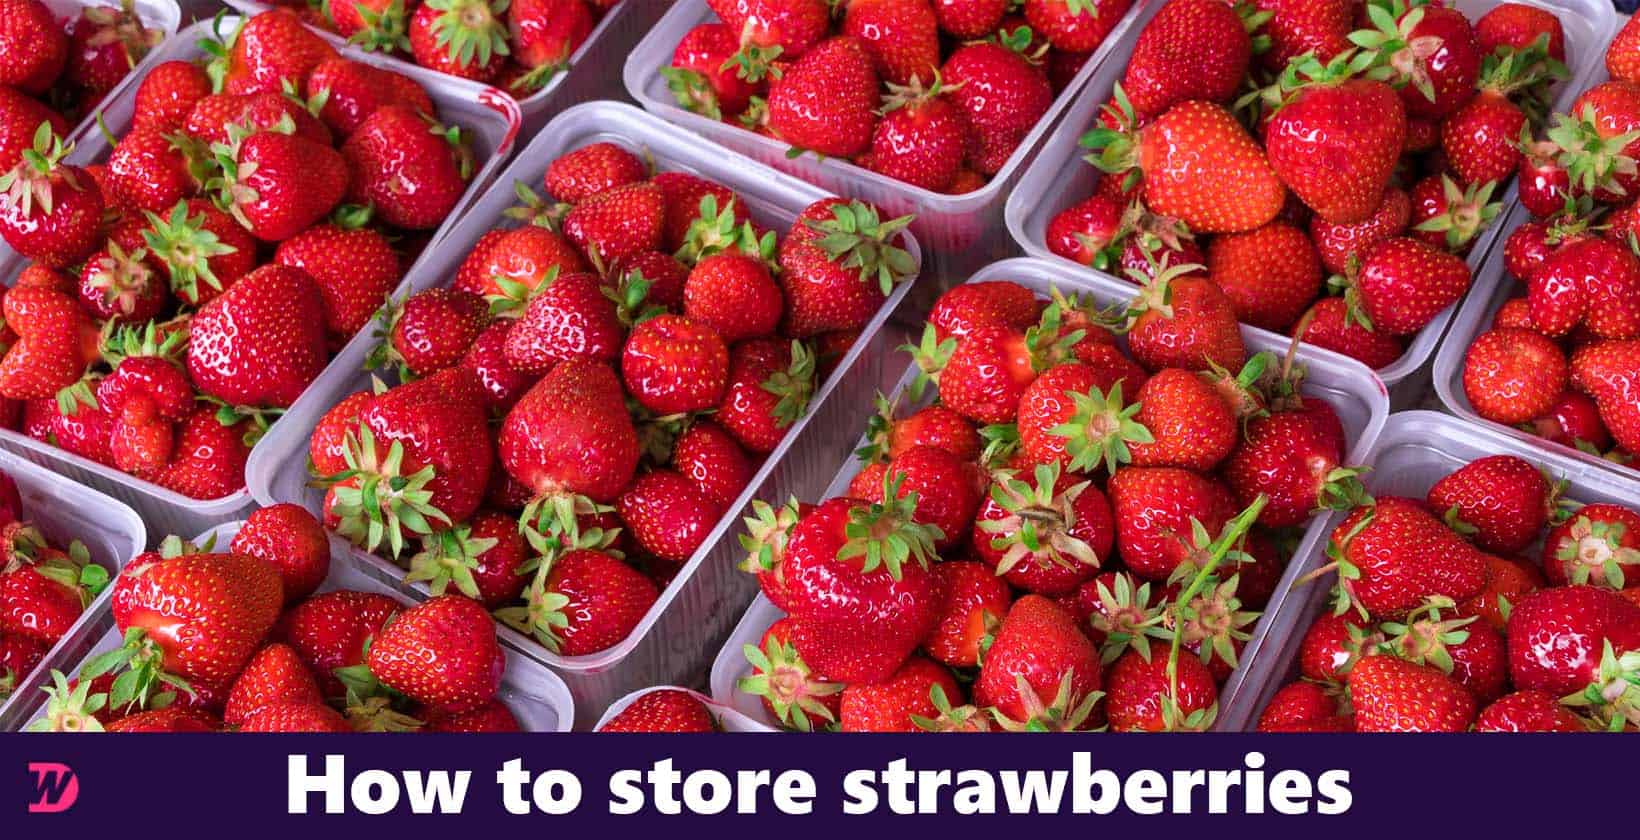 Storing strawberries